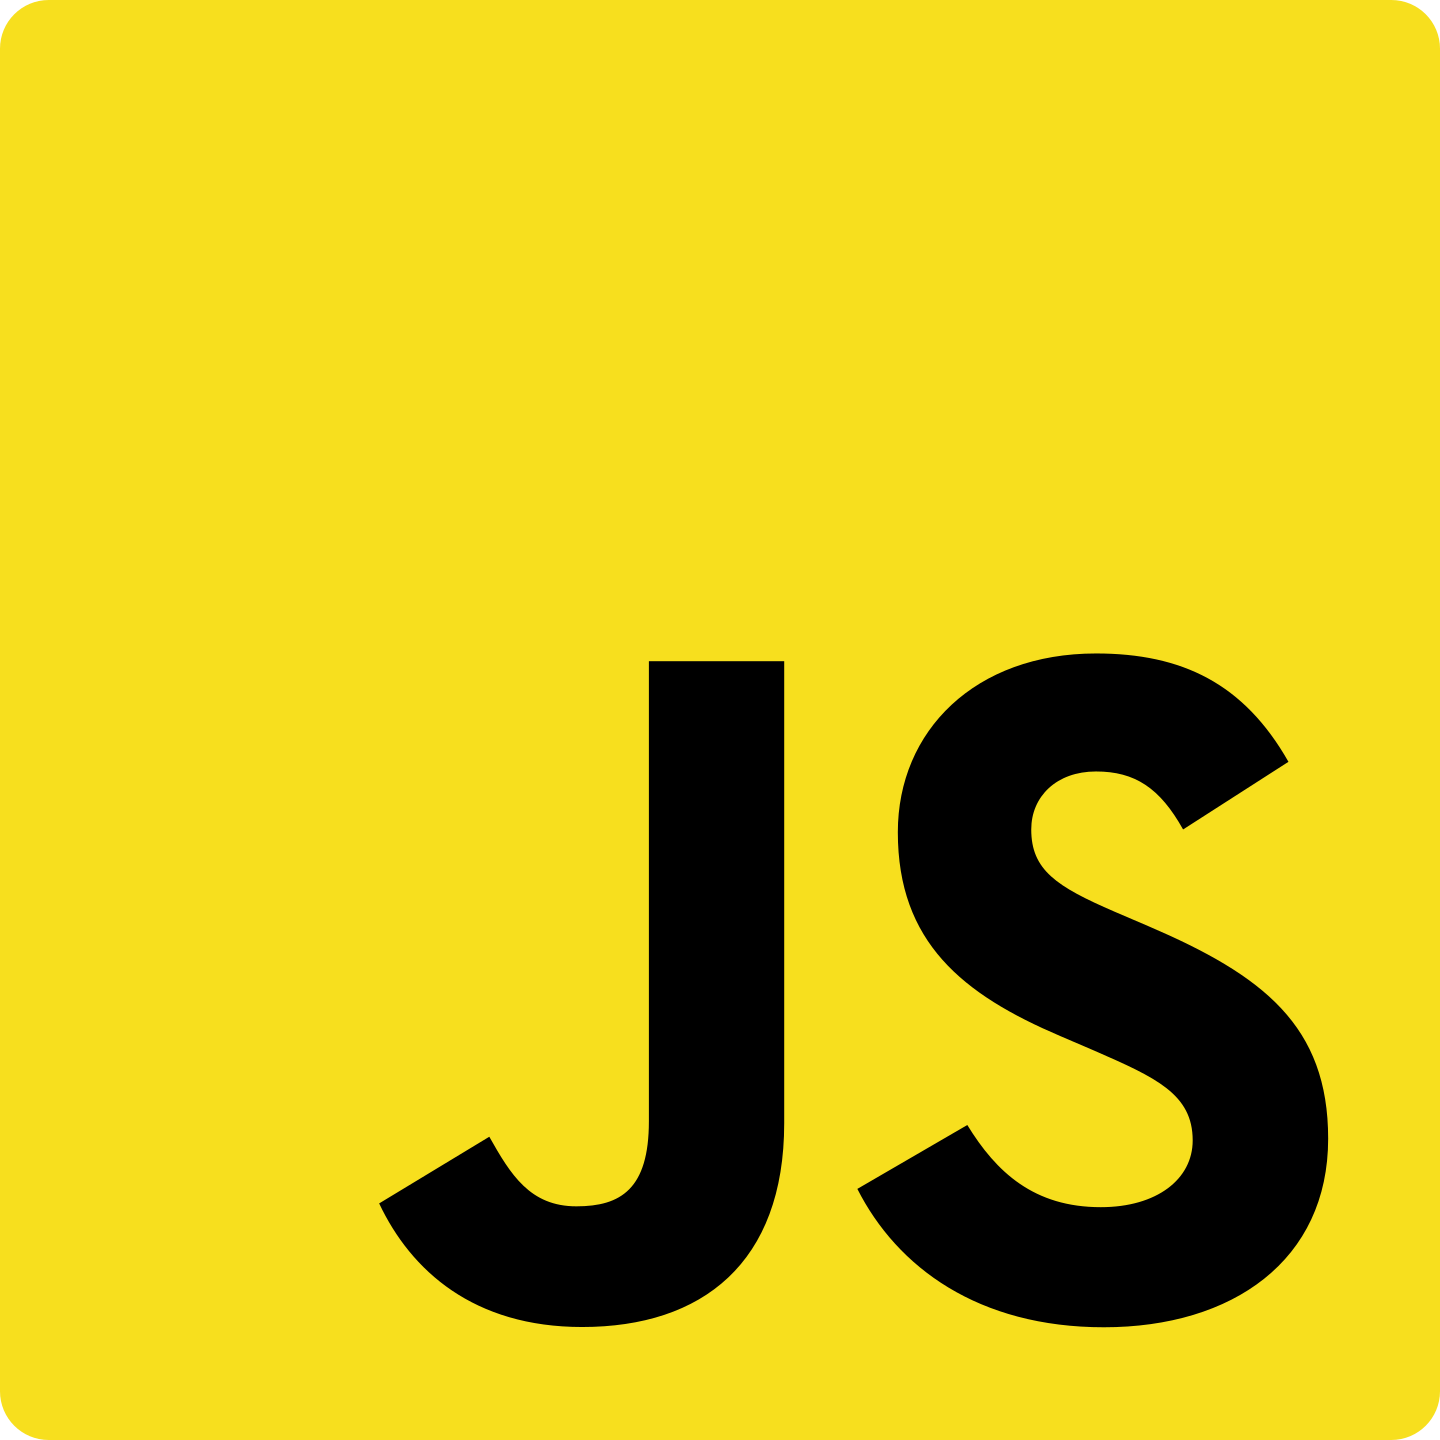 javascript logo 2 - JavaScript Logo